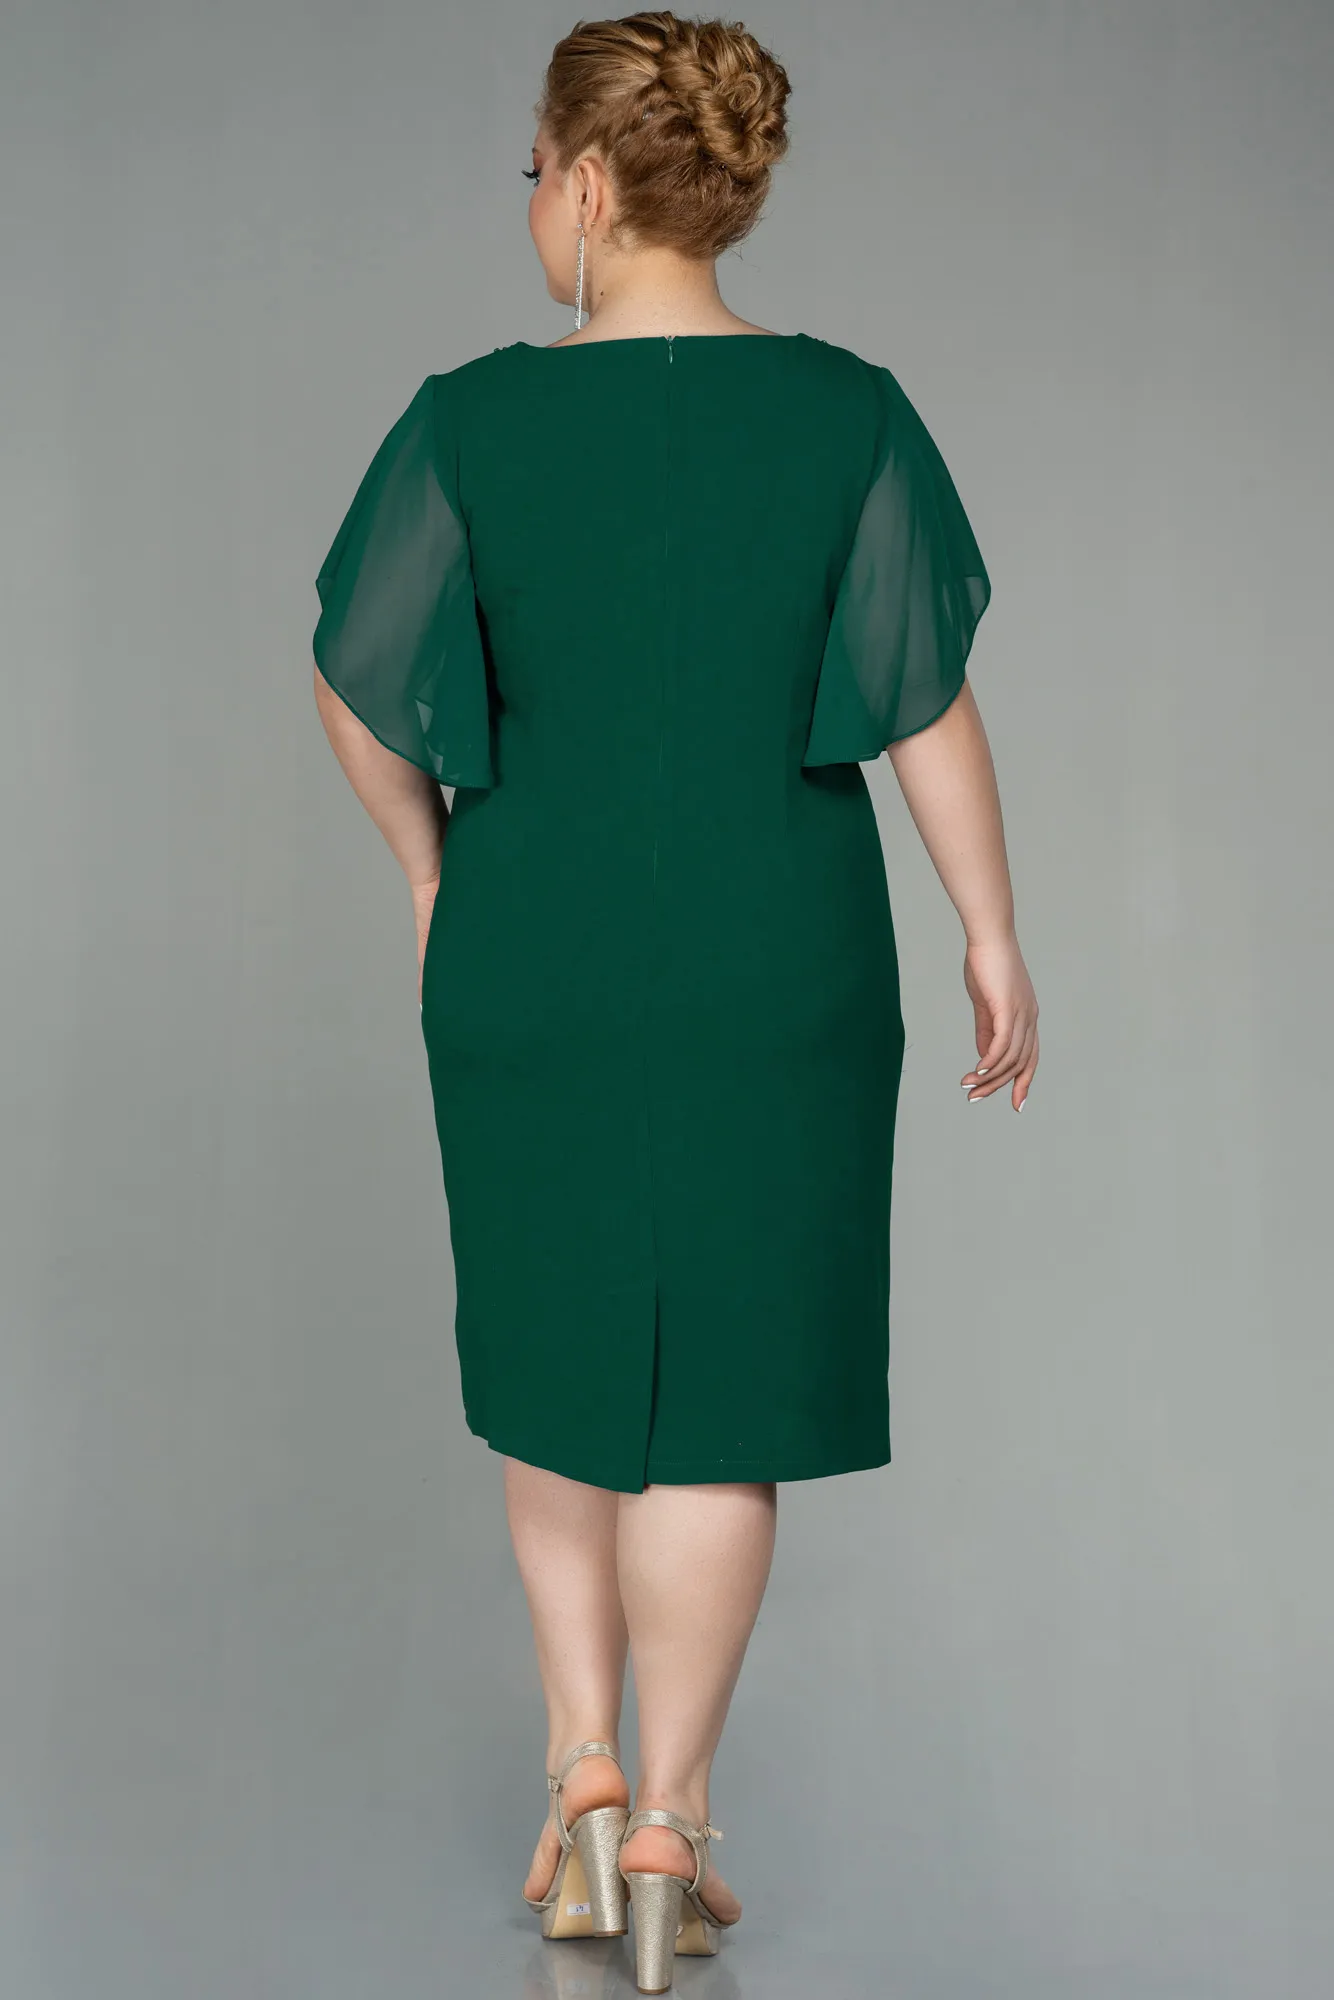 Emerald Green-Midi Plus Size Evening Dress ABK1626